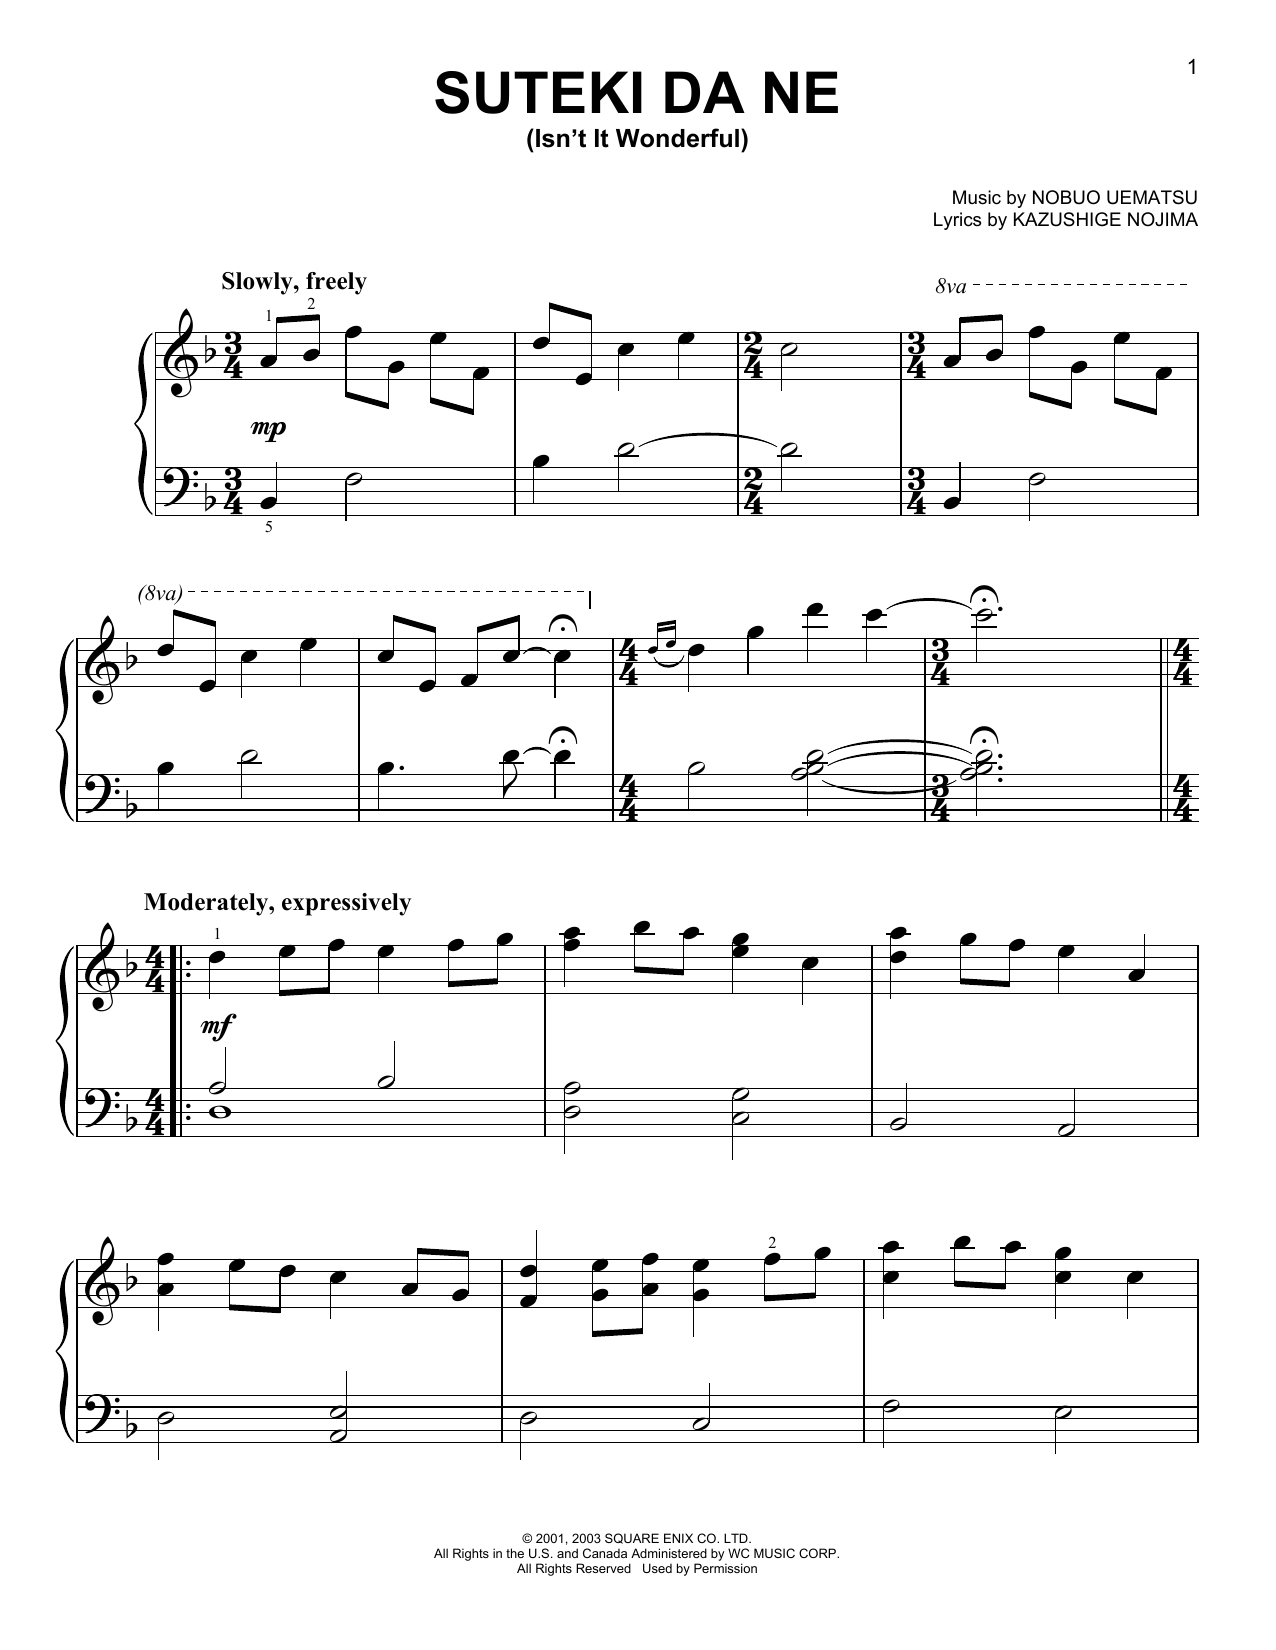 Download Nobuo Uematsu Suteki Da Ne (Isn't It Wonderful) (from Final Fantasy X) Sheet Music and learn how to play Easy Piano PDF digital score in minutes